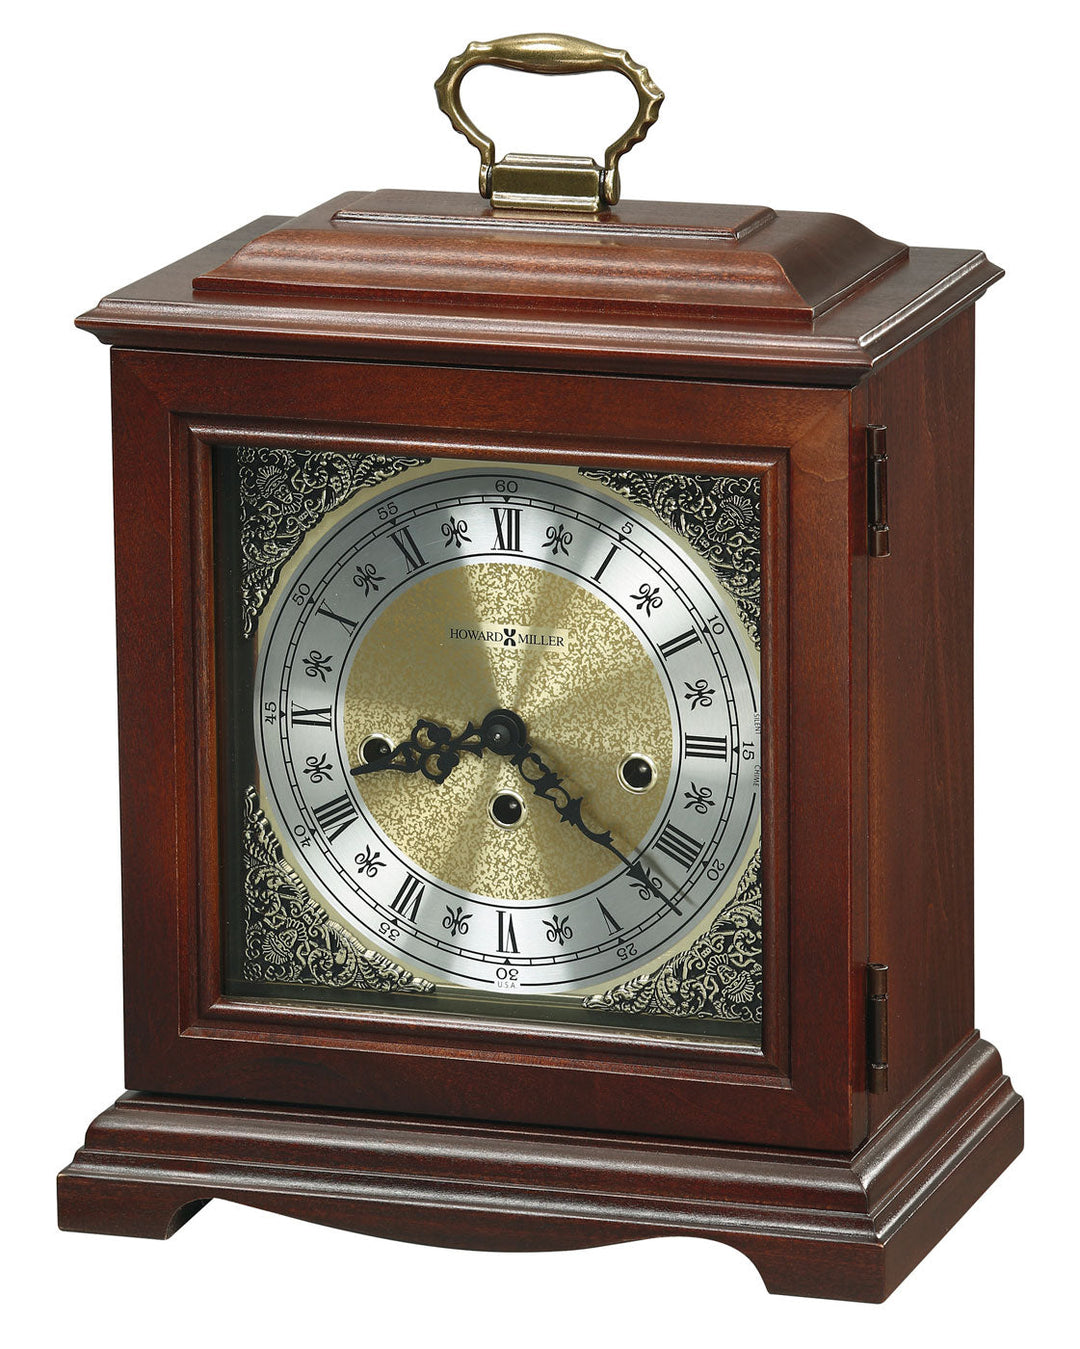 Graham Bracket Key Wound Mantel Clock by Howard Miller